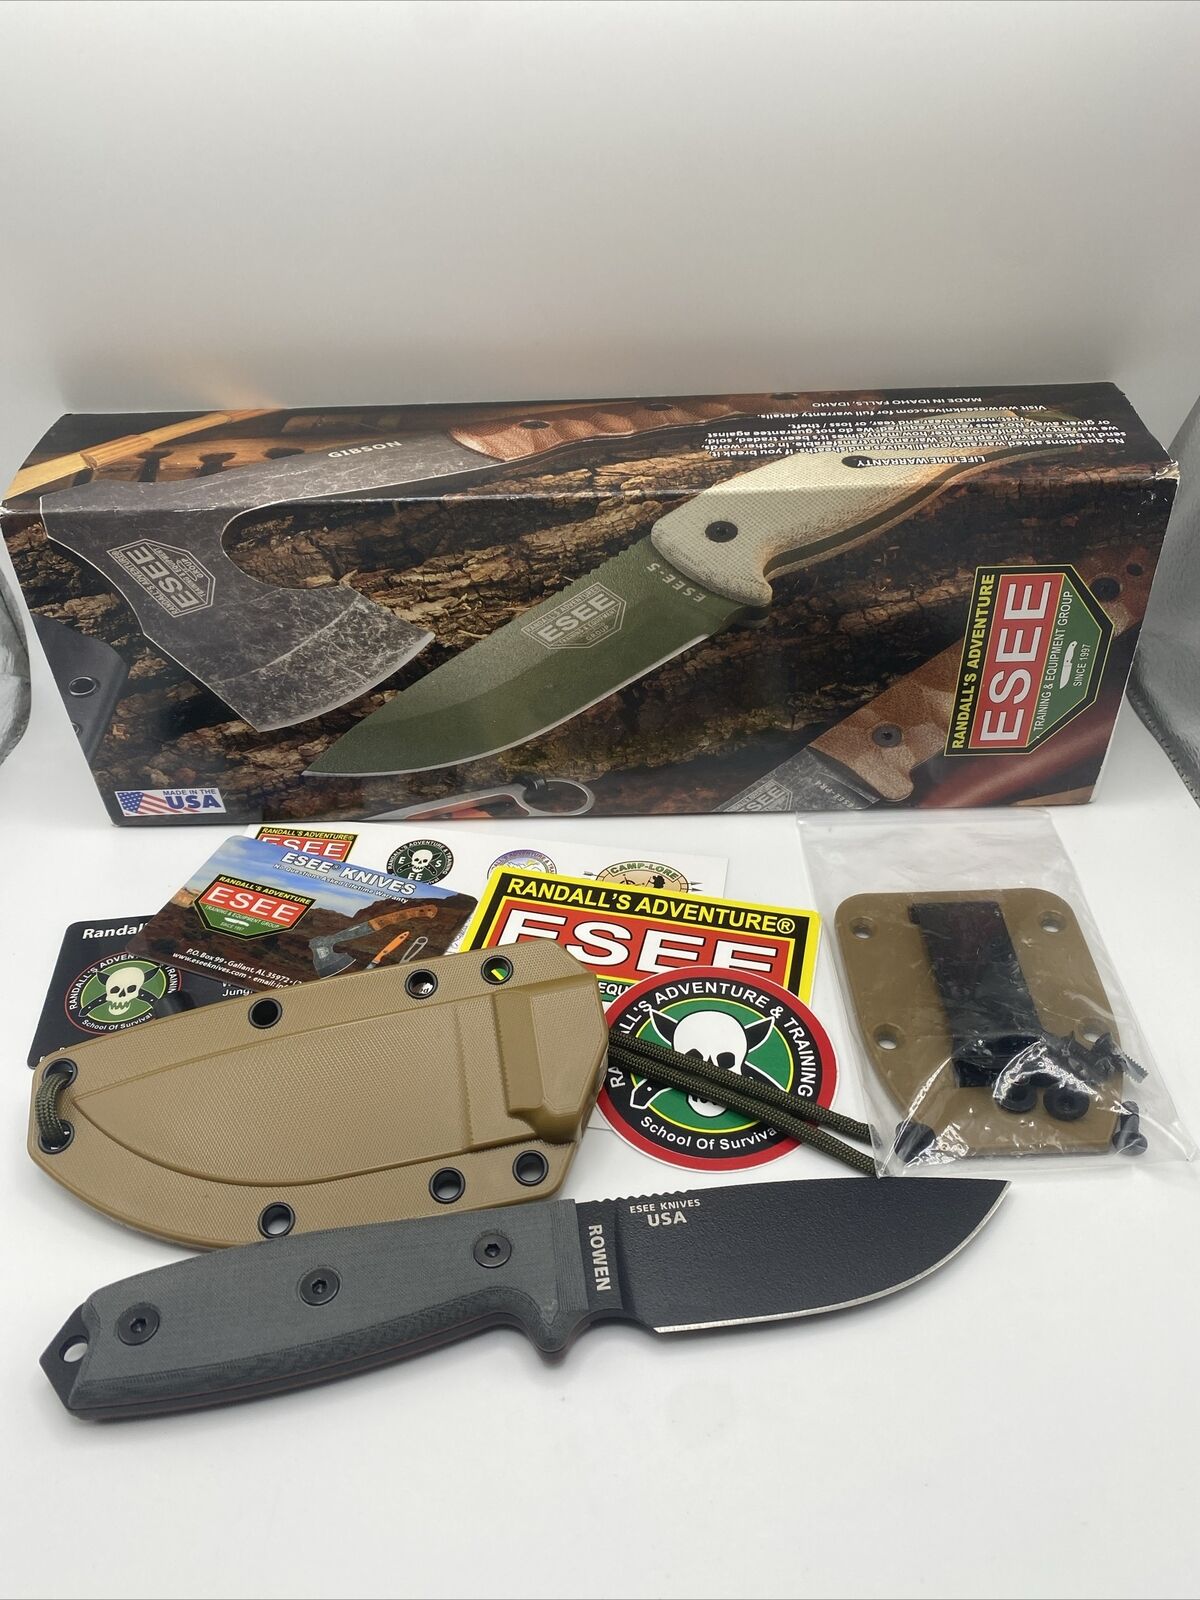 ESEE Model 3 Fixed Knife 1095 Carbon Steel Full Tang Blade Black Micarta Handle